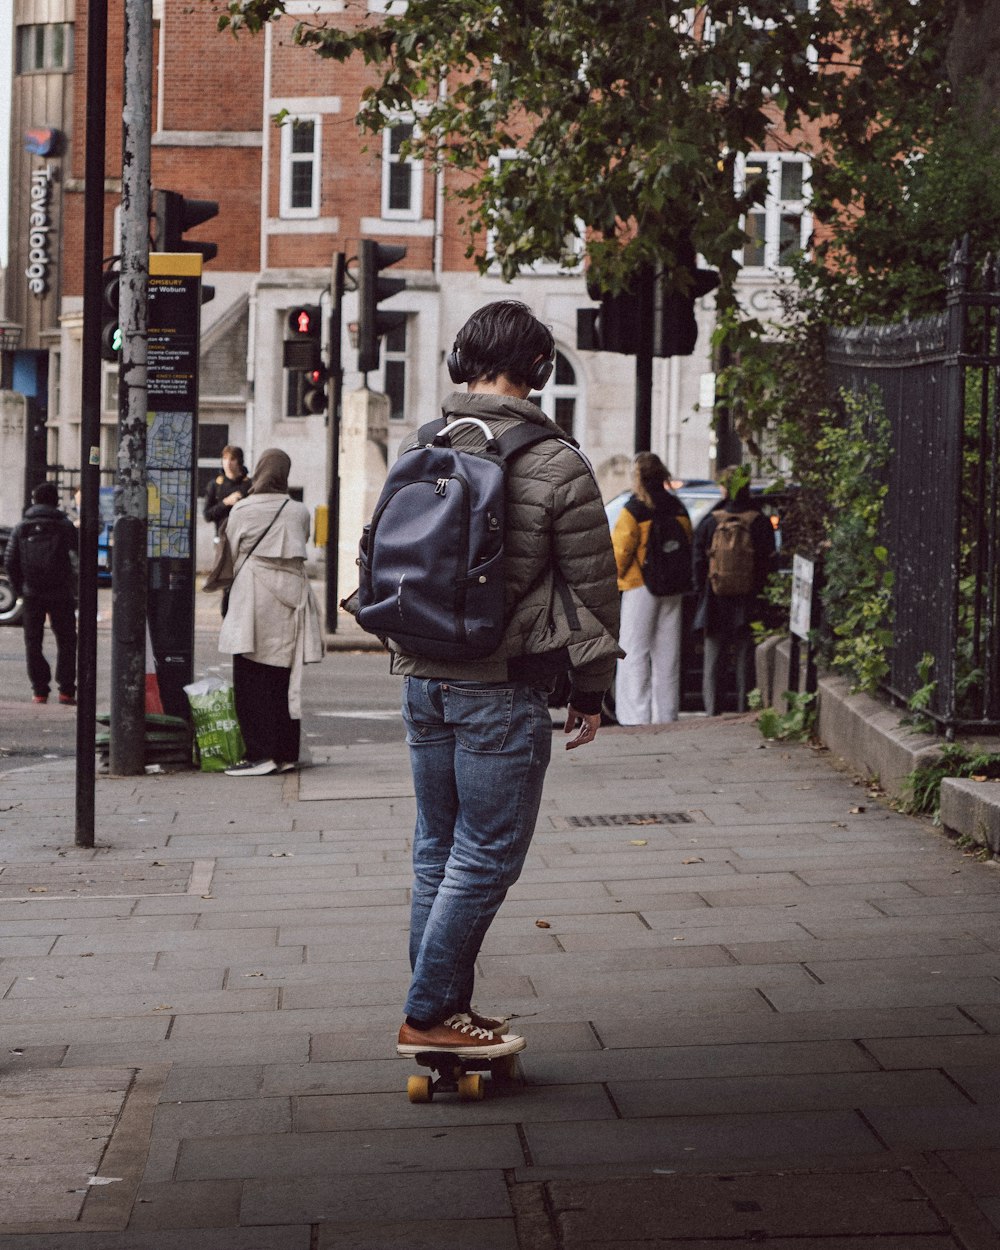 a man riding a skateboard down a sidewalk